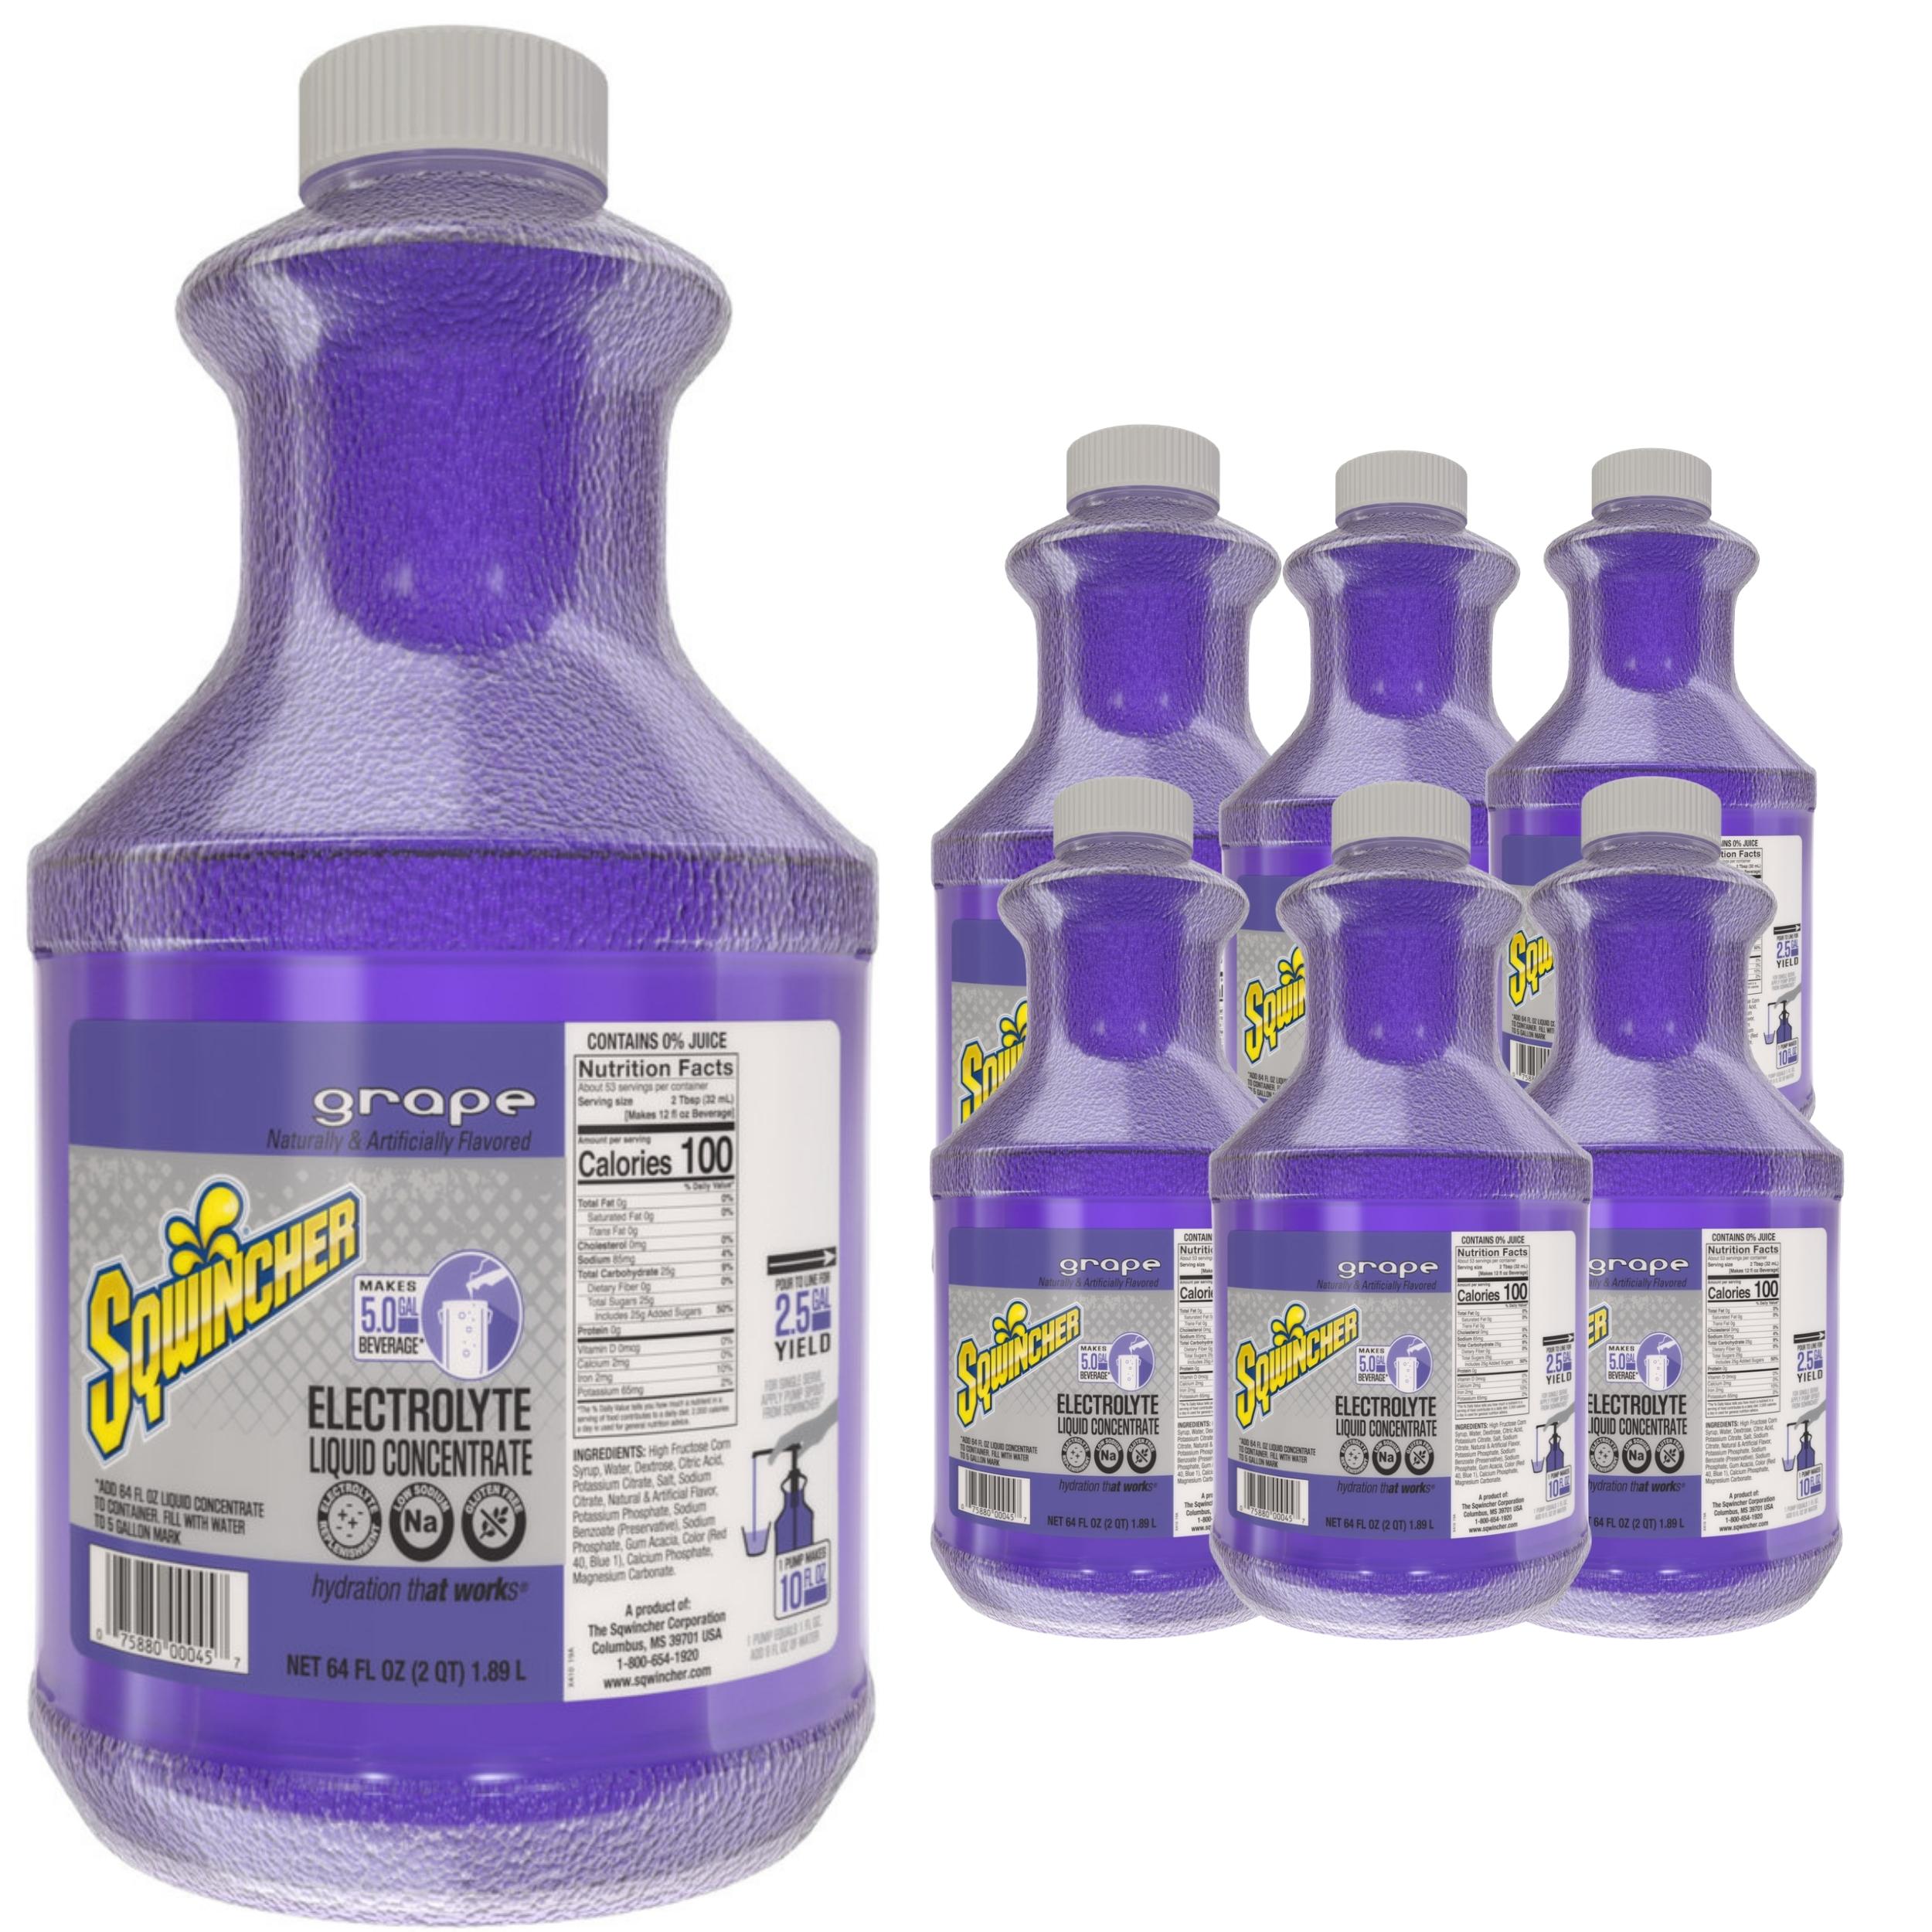 SQWINCHER- Original Flavored Liquid Concentrate -159030322